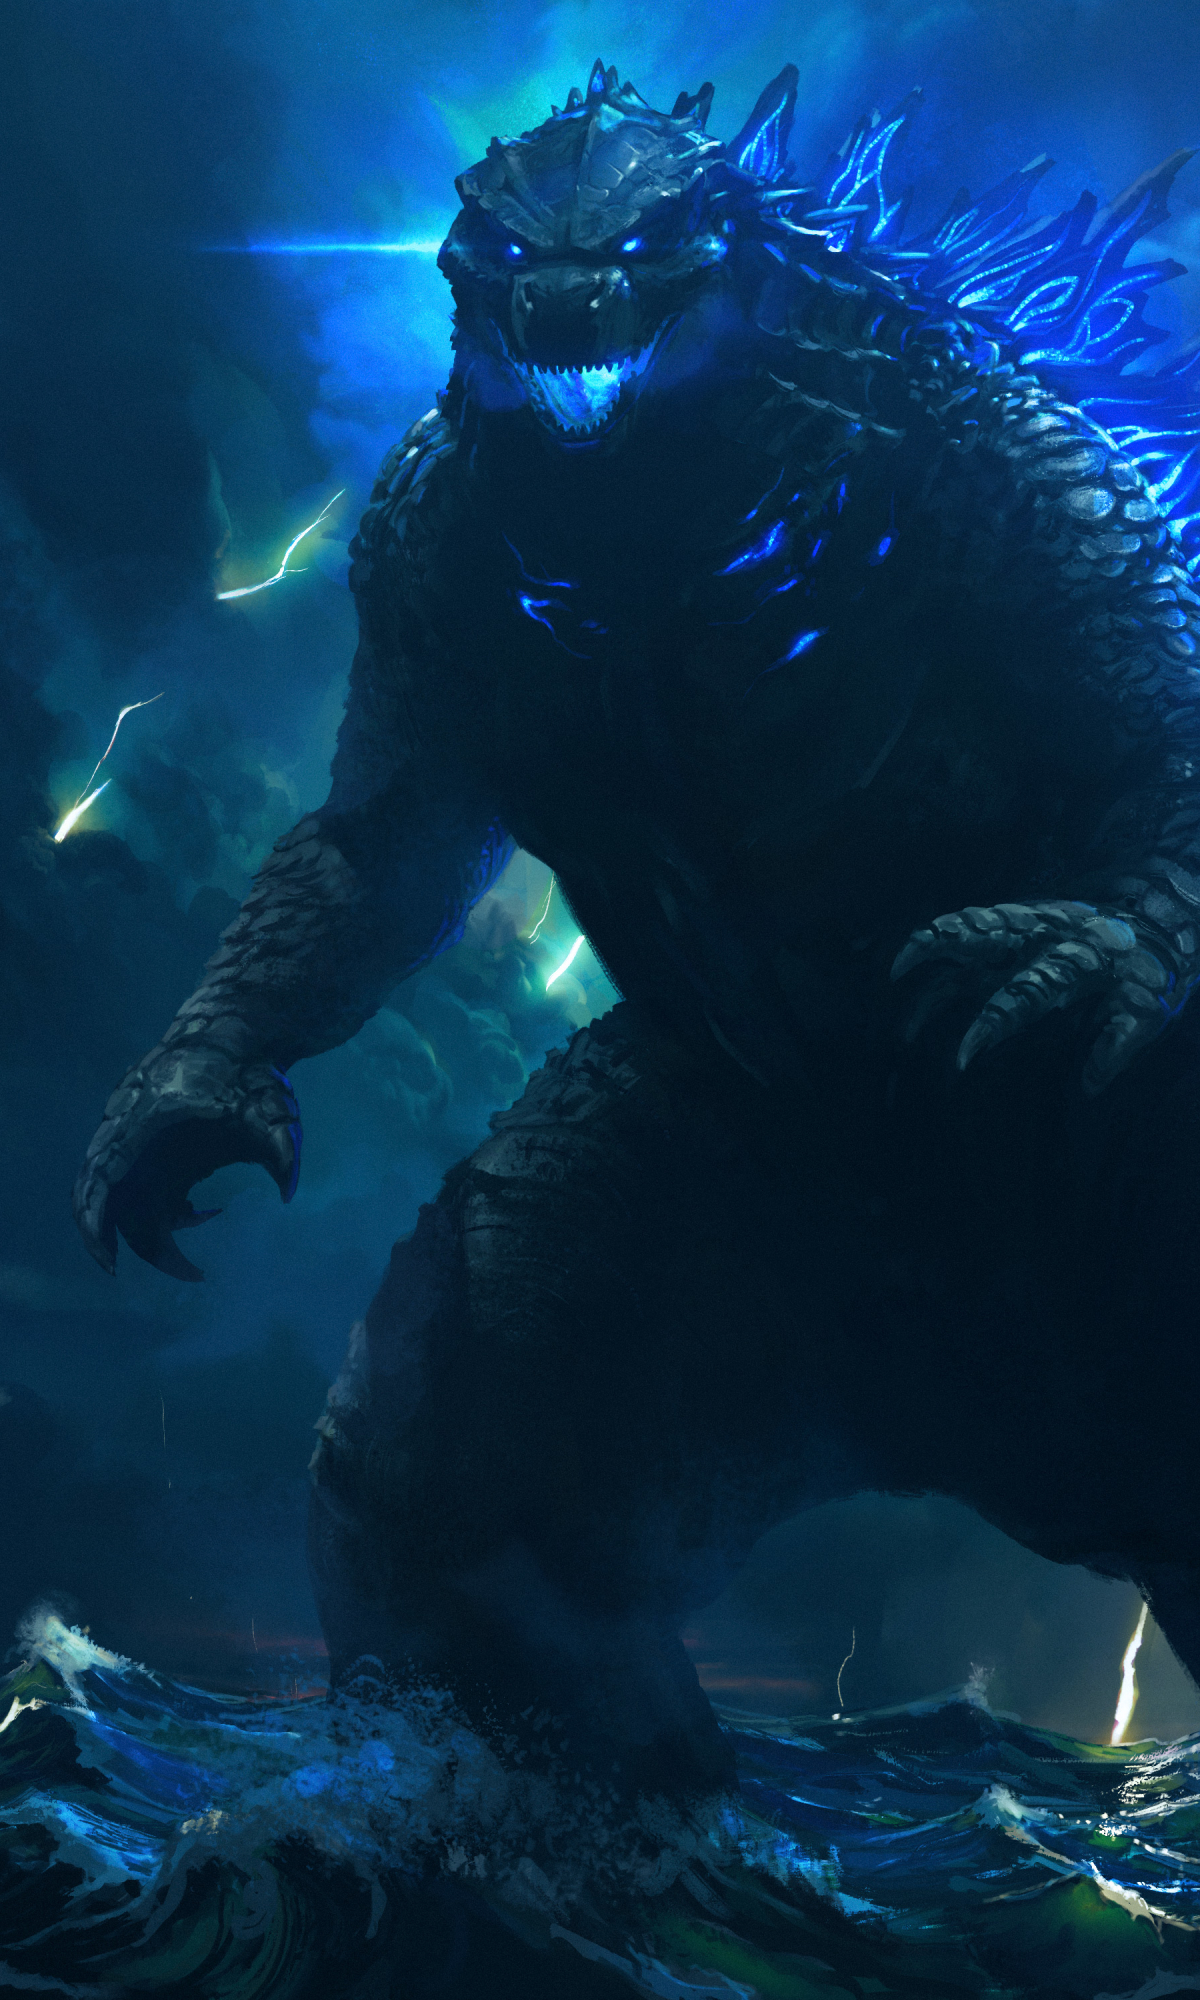 Descarga gratuita de fondo de pantalla para móvil de Fantasía, Godzilla, Godzilla (Monsterverso).